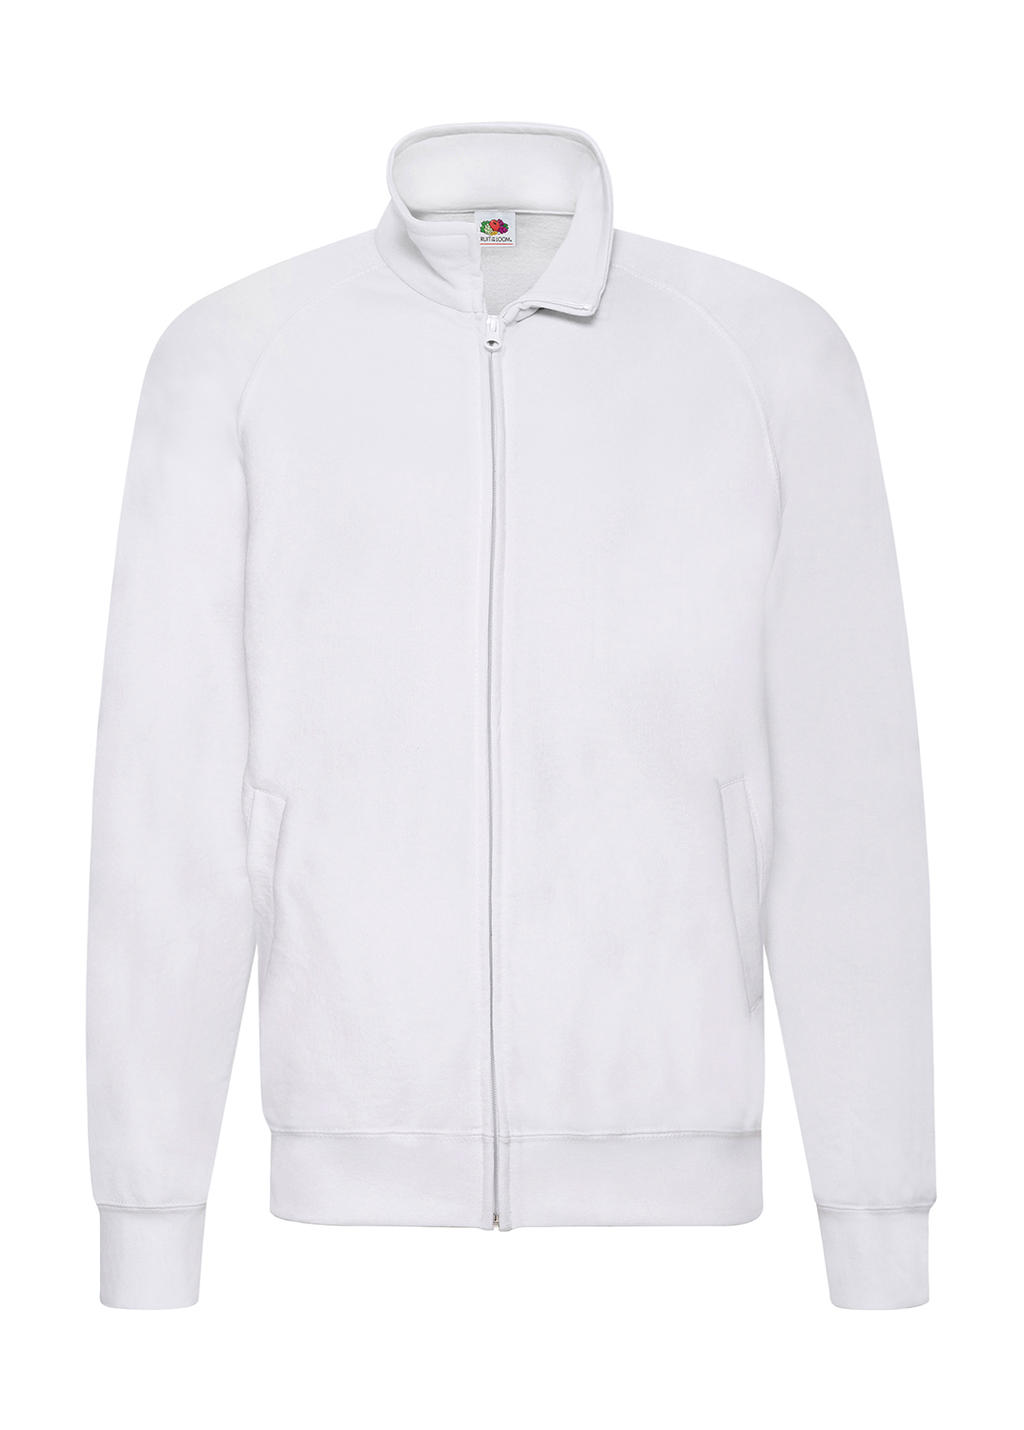  Lightweight Sweat Jacket in Farbe White